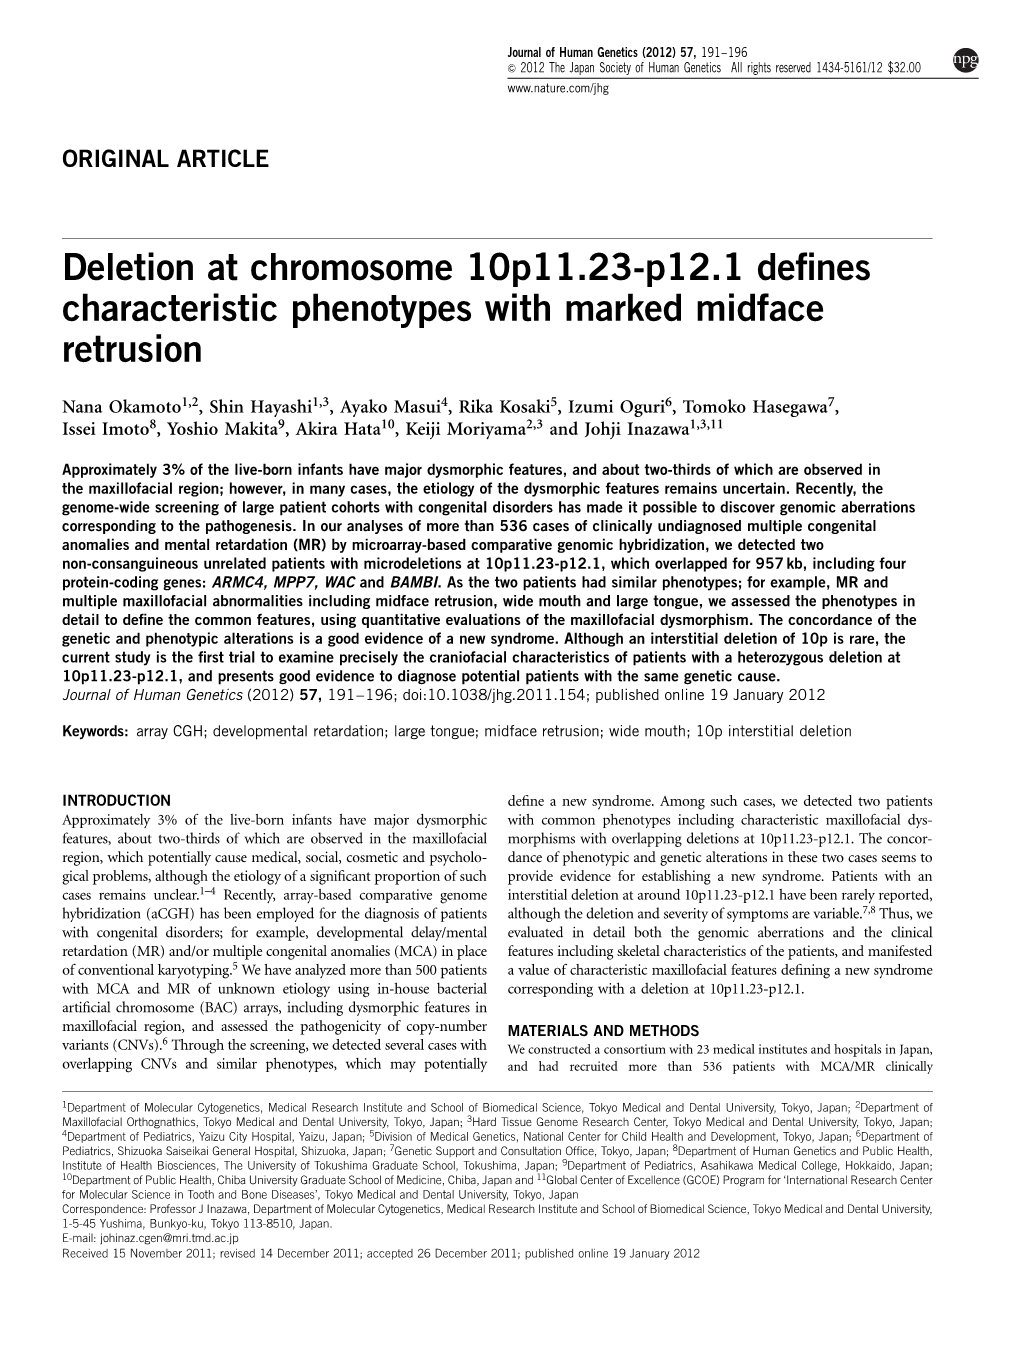 Deletion at Chromosome 10P11.23-P12.1 Defines